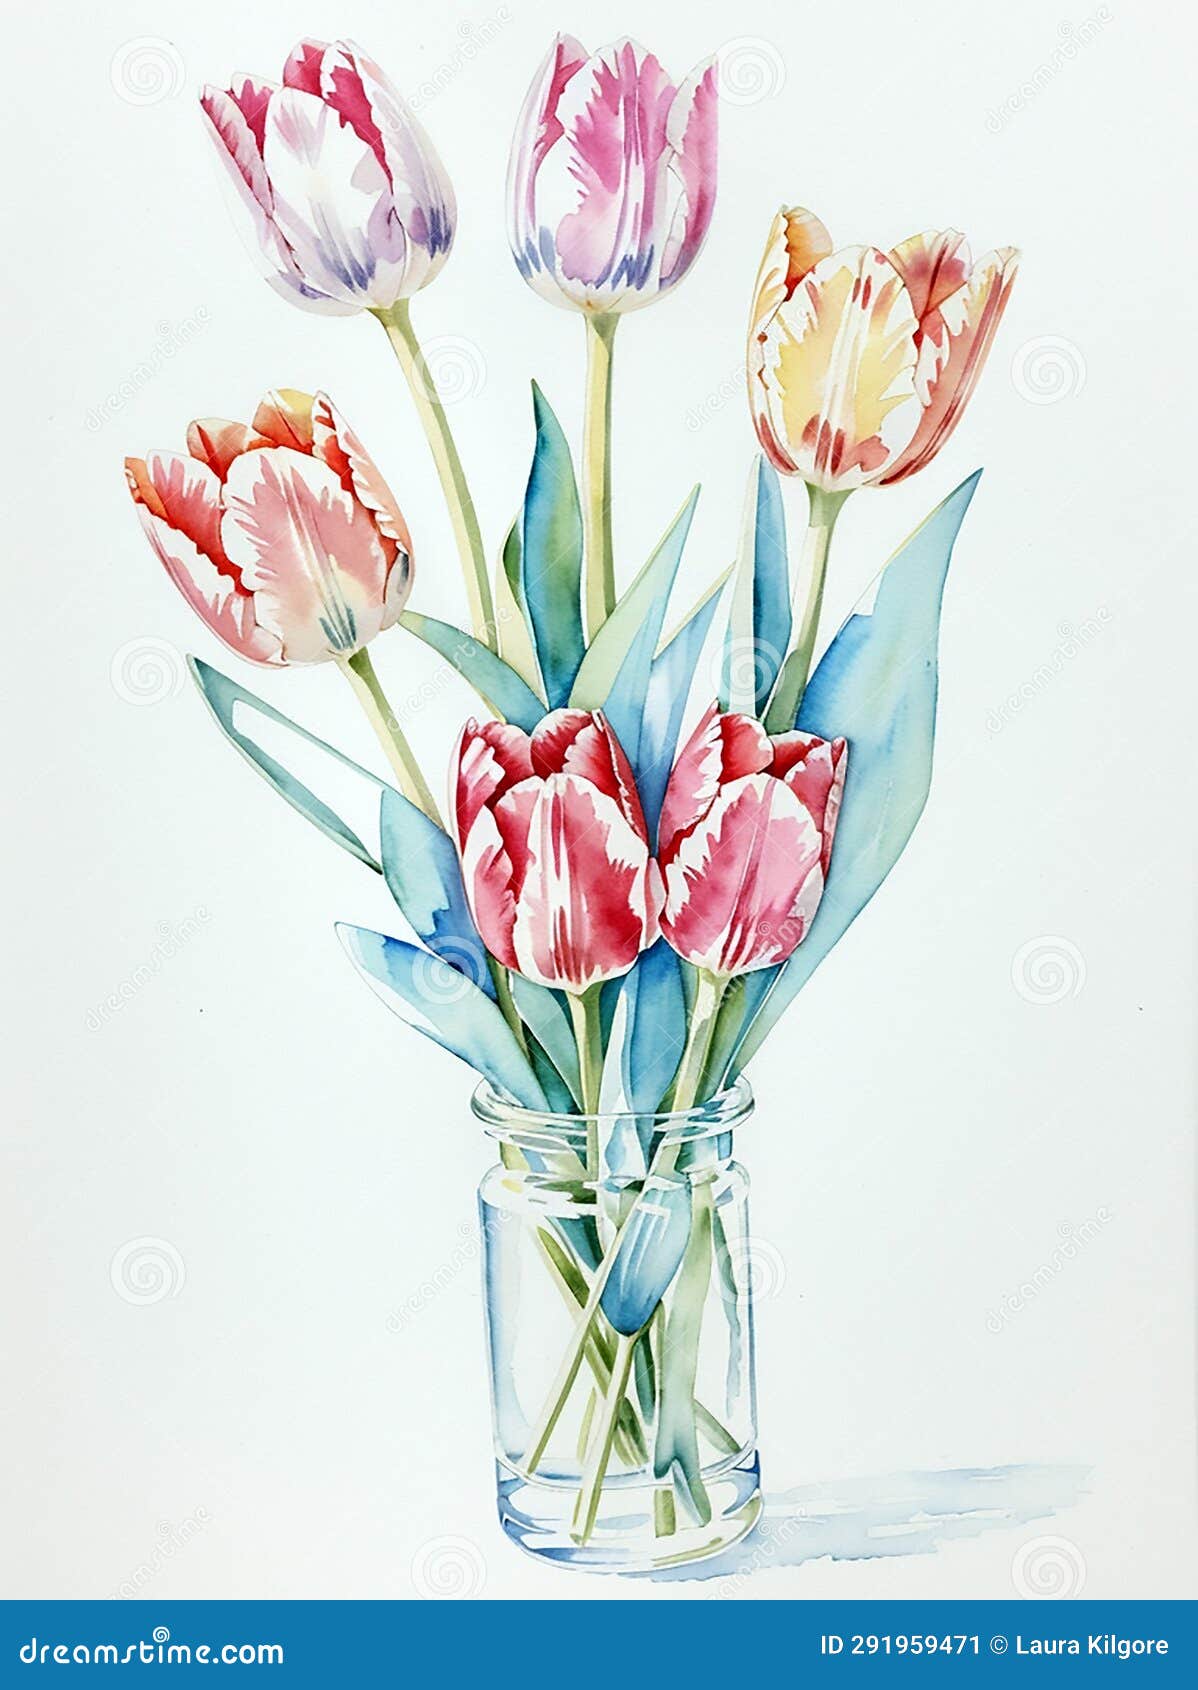 watercolor springtime tulips in a vase.